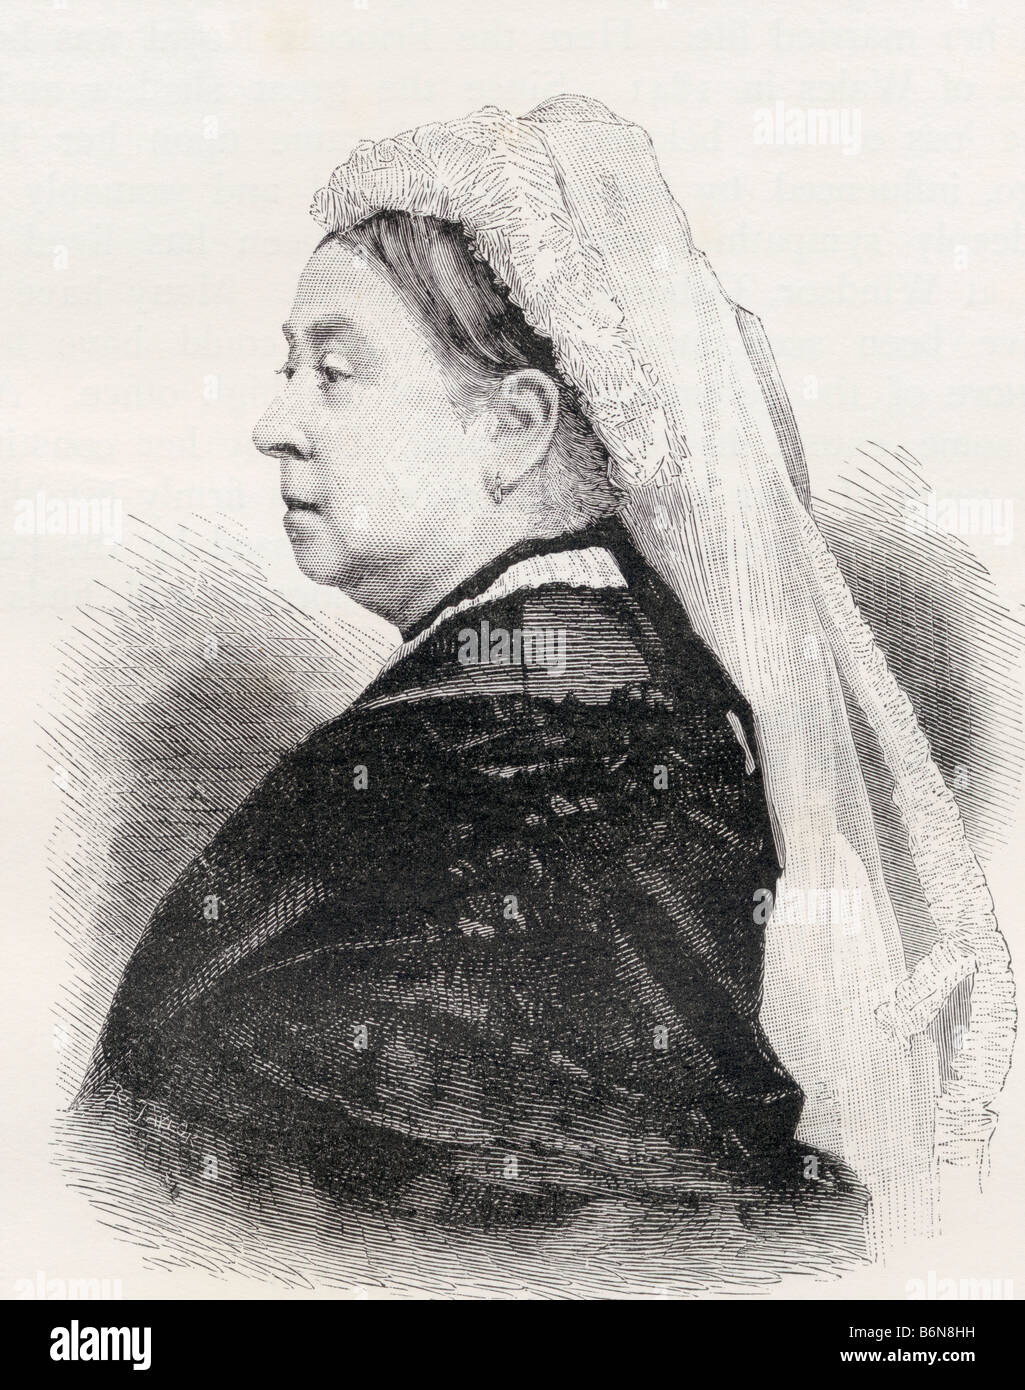 Queen Victoria, 1819 - 1901. Princess Alexandrina Victoria of Saxe Coburg,Queen of Great Britain and Ireland and Empress of India. Stock Photo